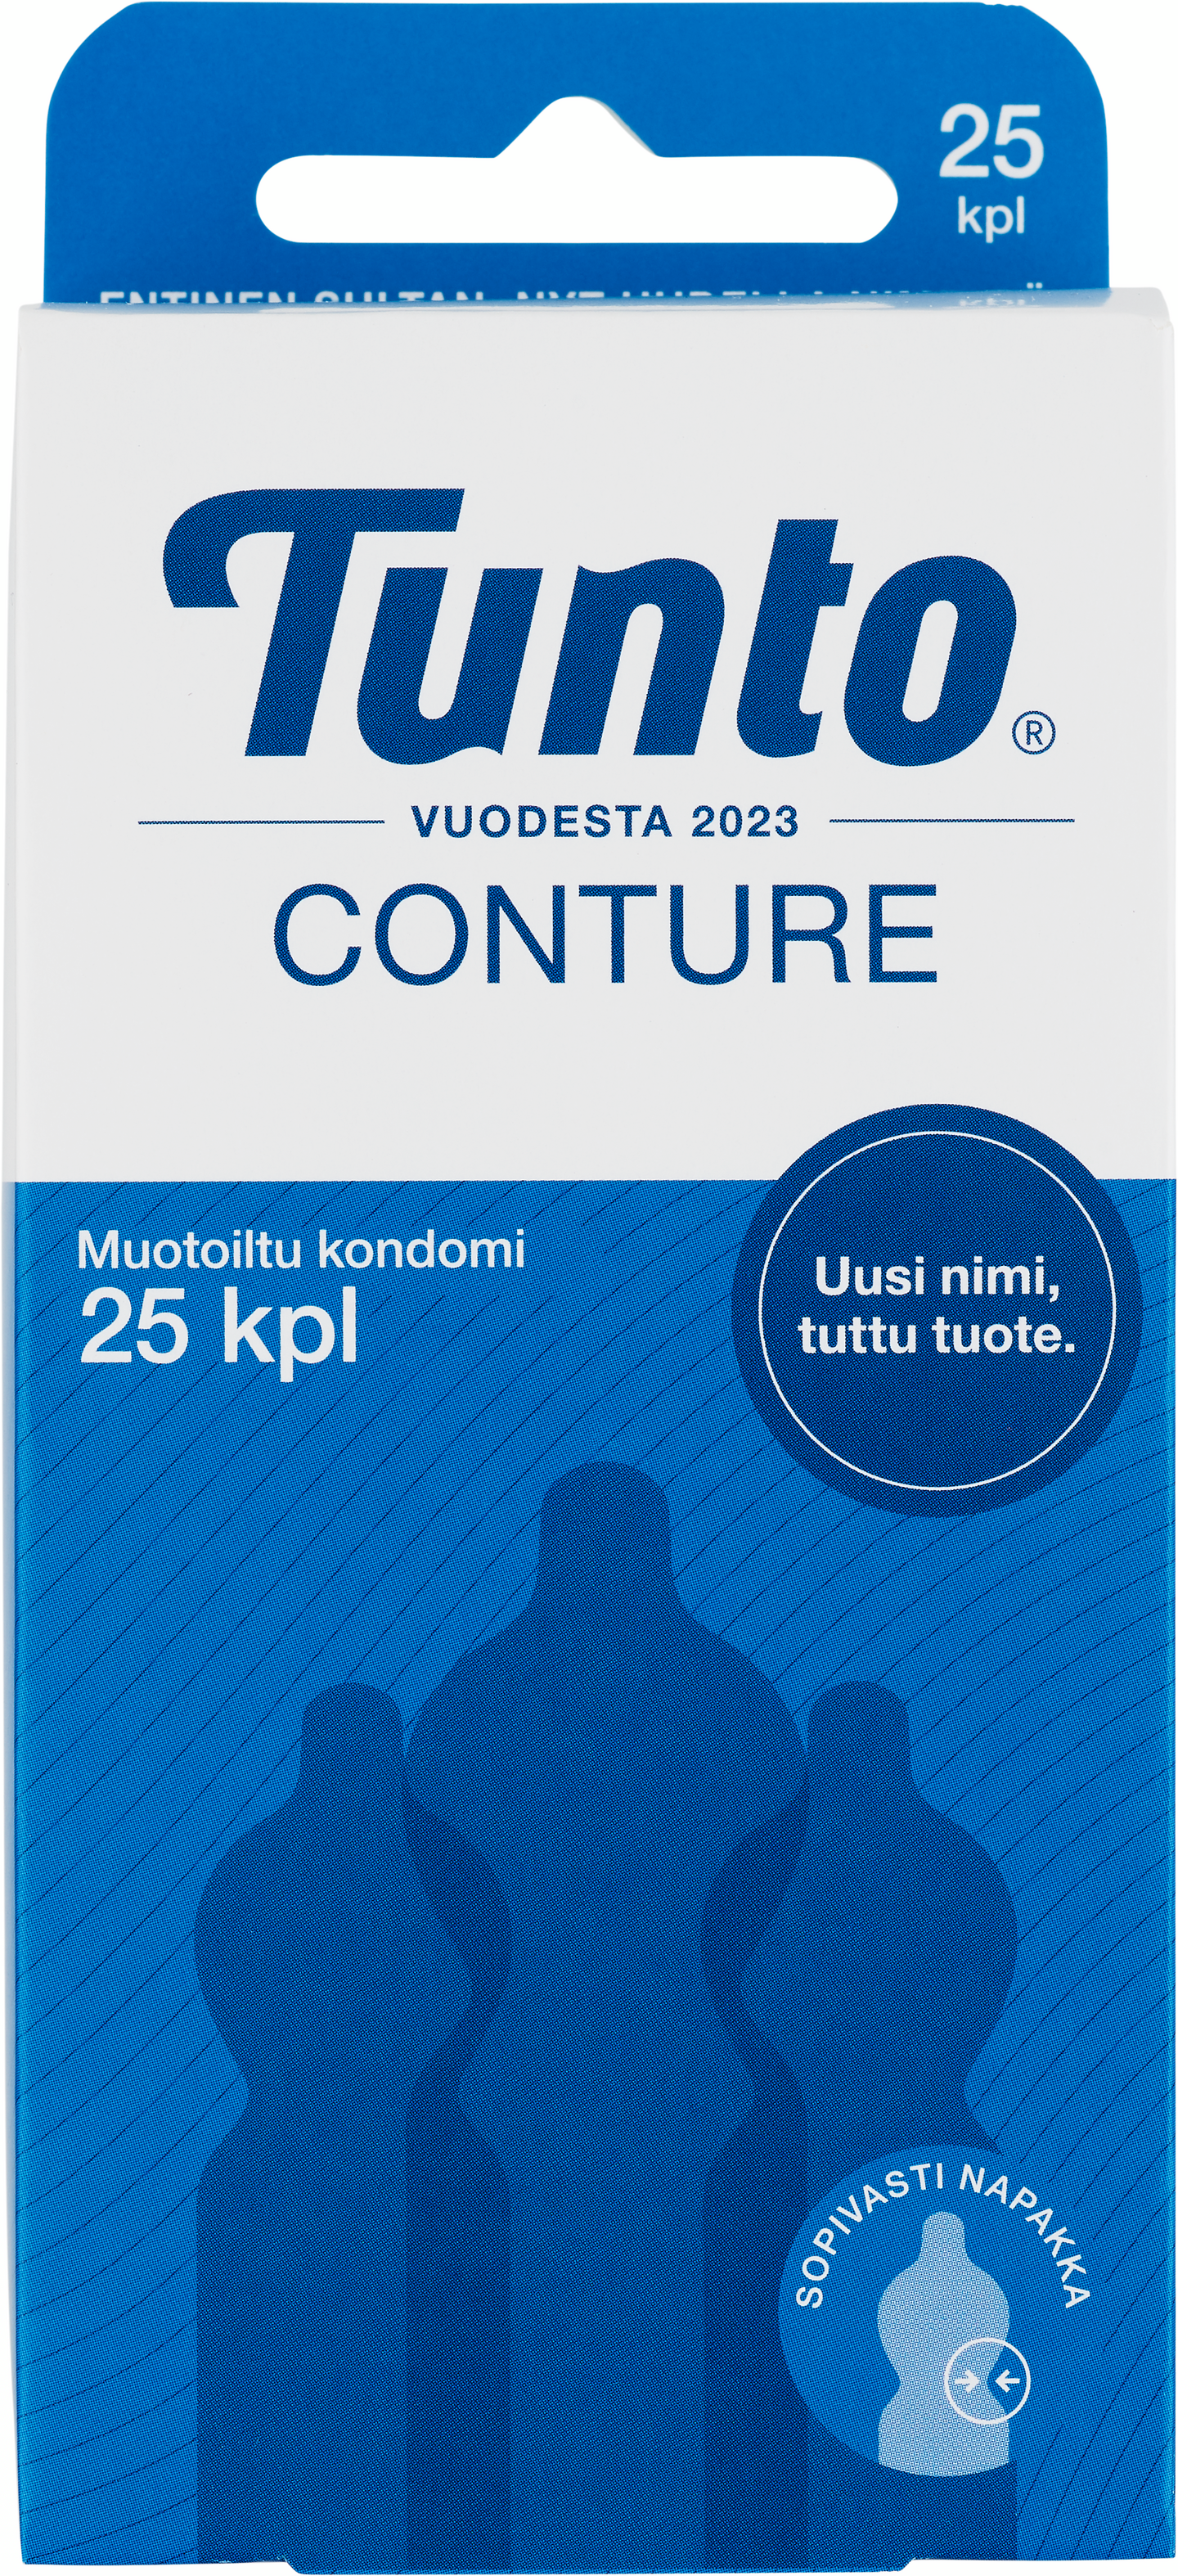 Tunto kondomi 25kpl Conture muotoiltu